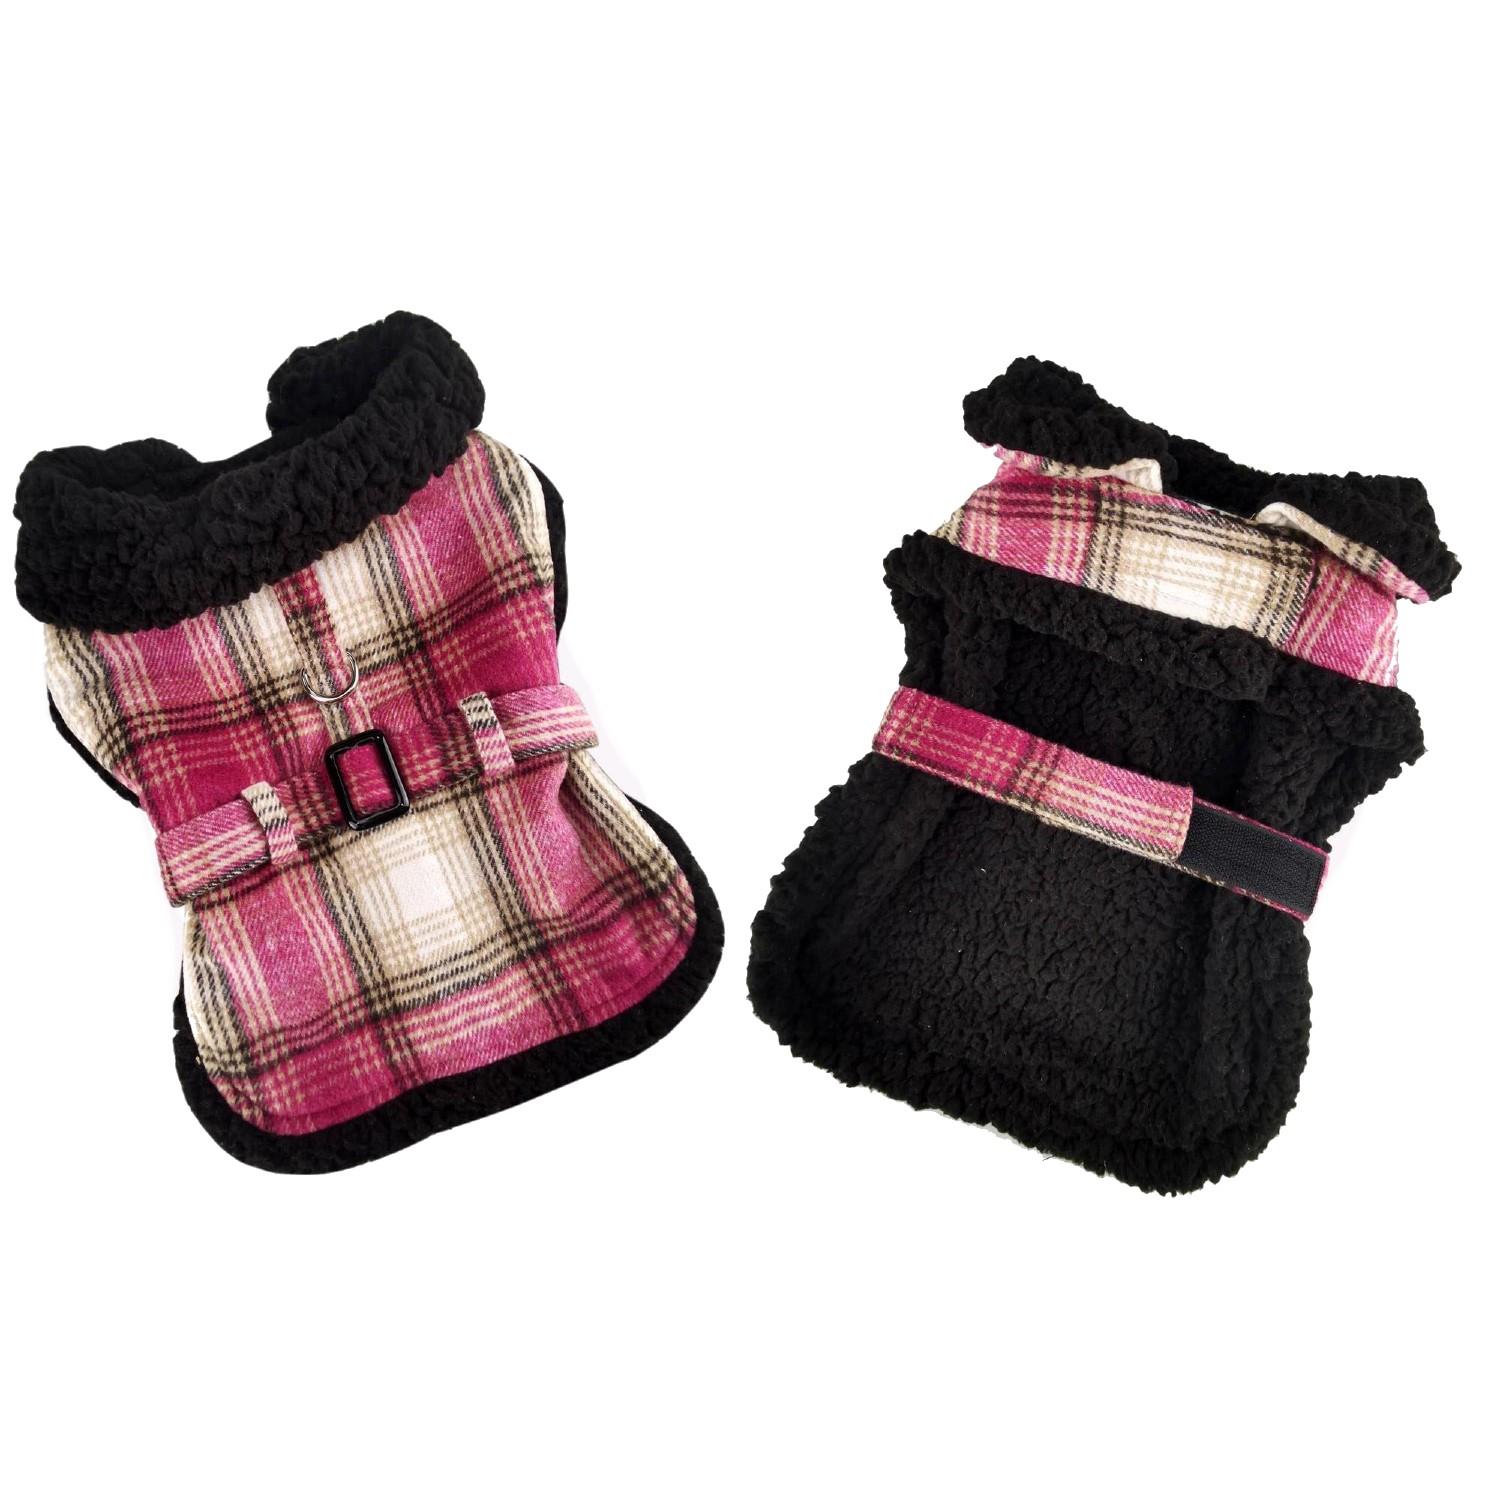 Doggie Design Plaid Sherpa Lined Dog Harness Coat - Hot Pink & Tan